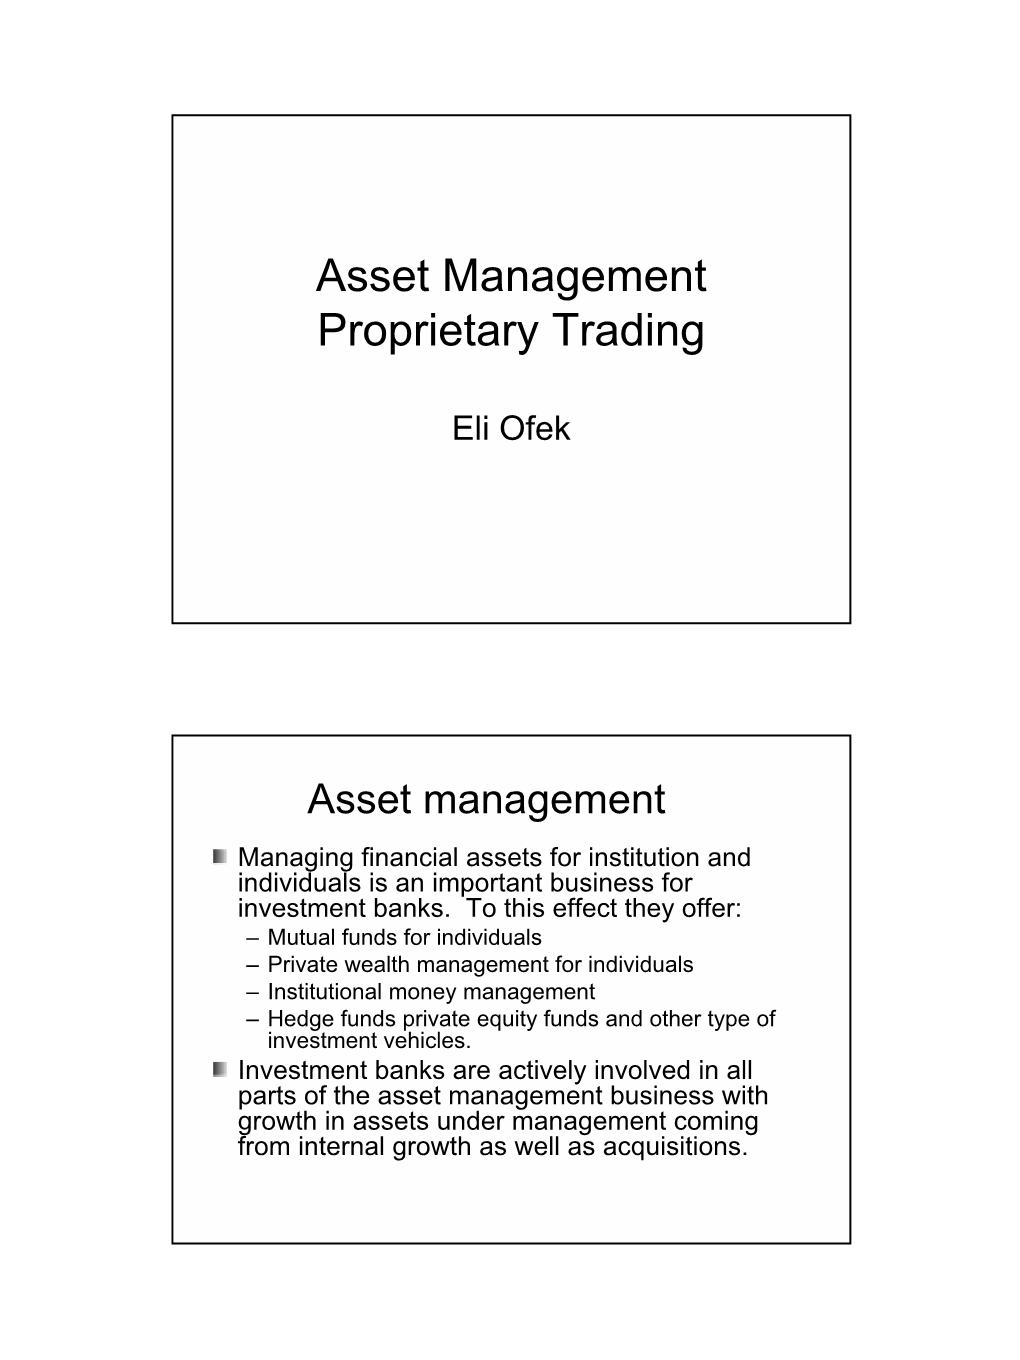 Asset Management Proprietary Trading